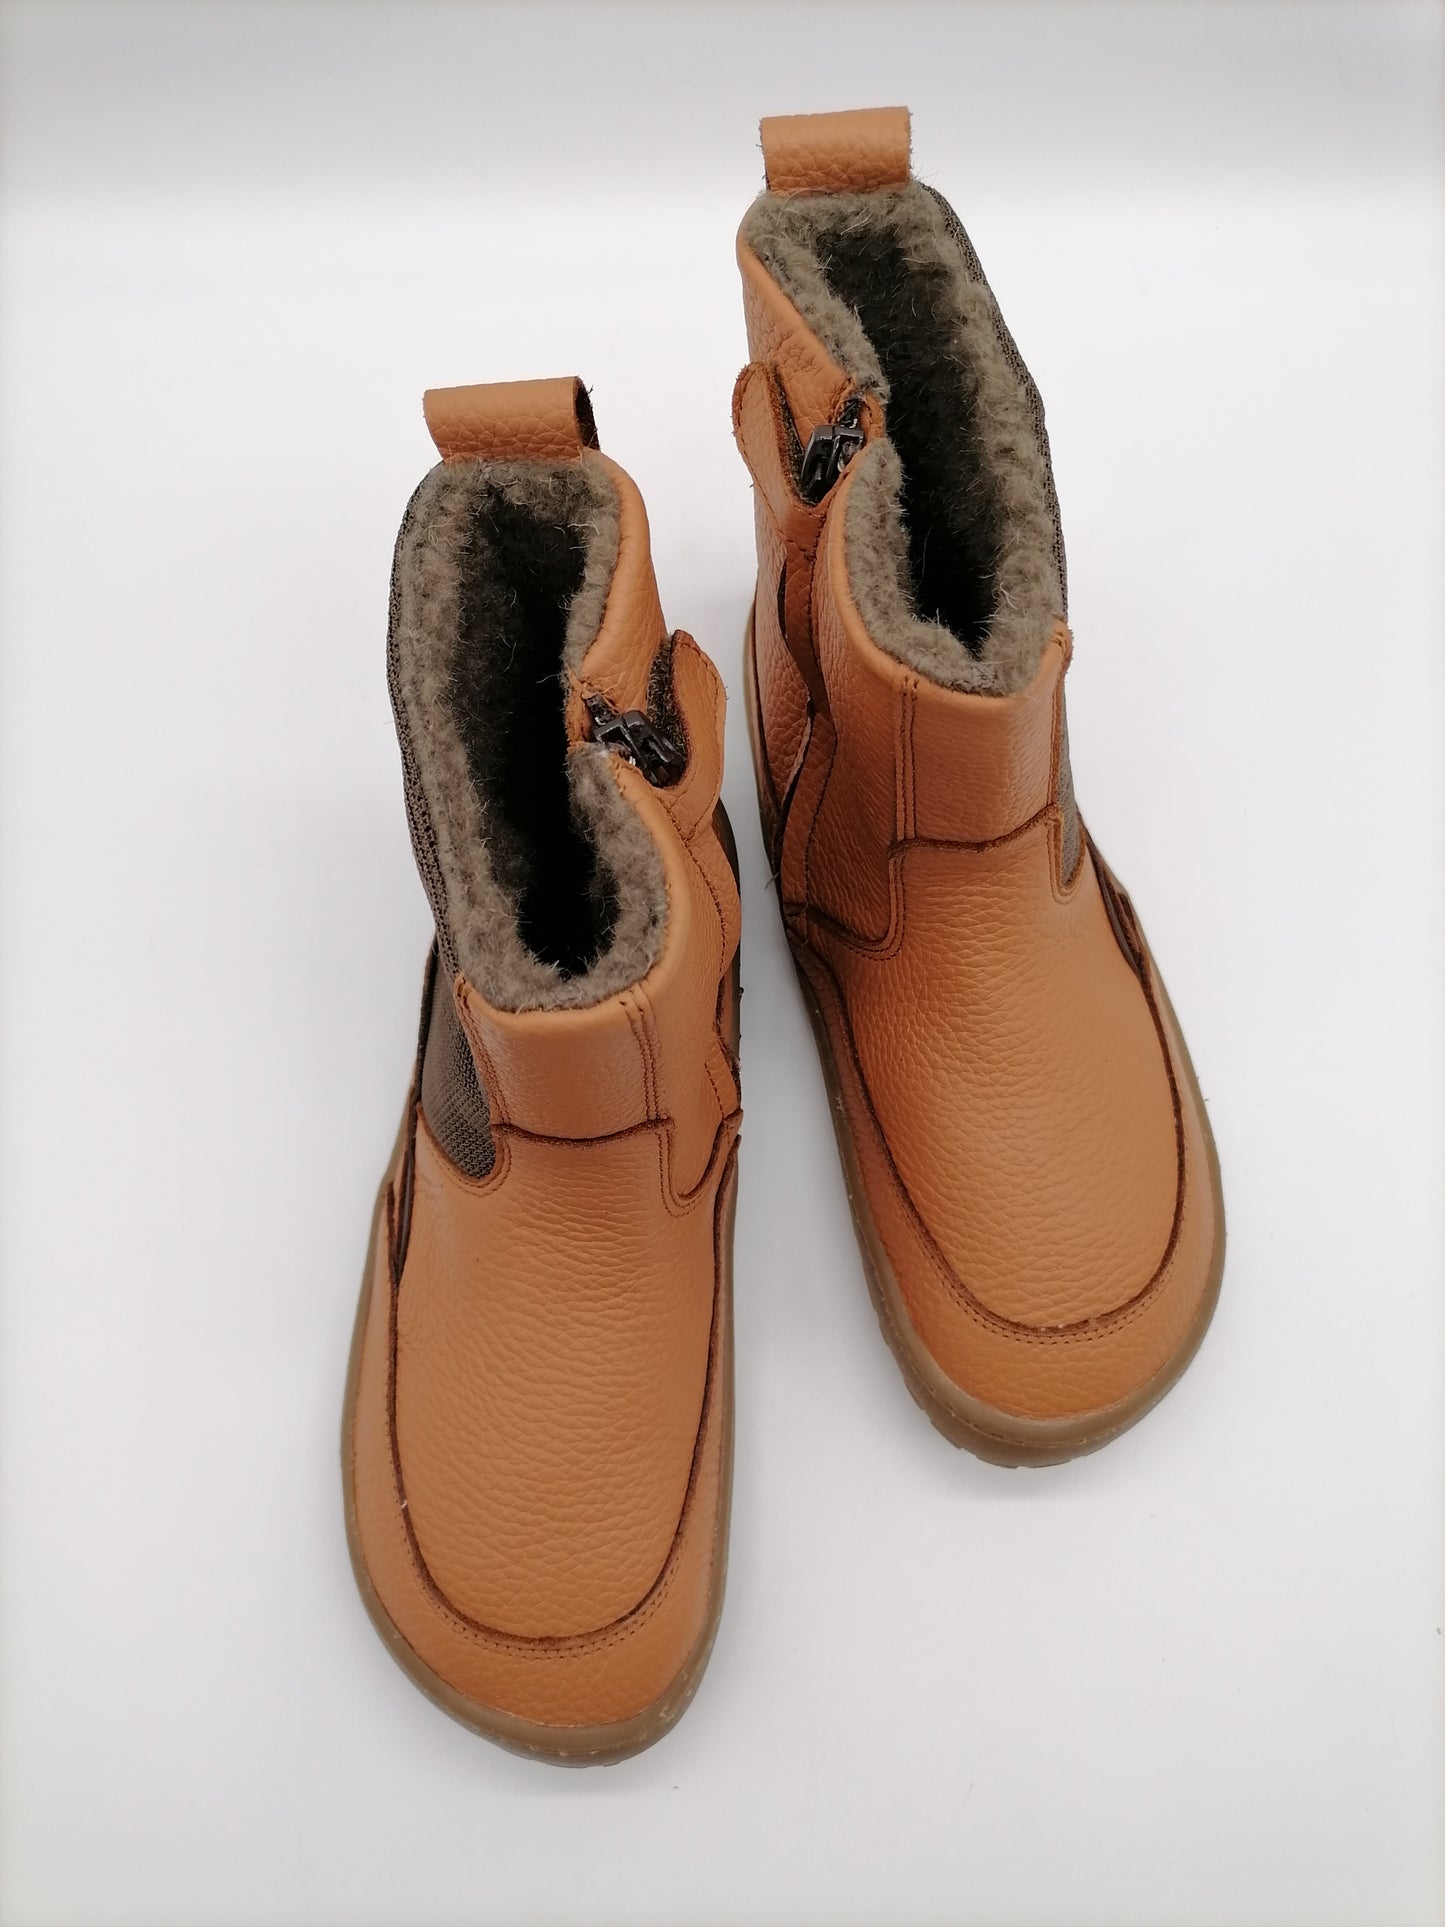 Froddo Barefoot Wool Boots